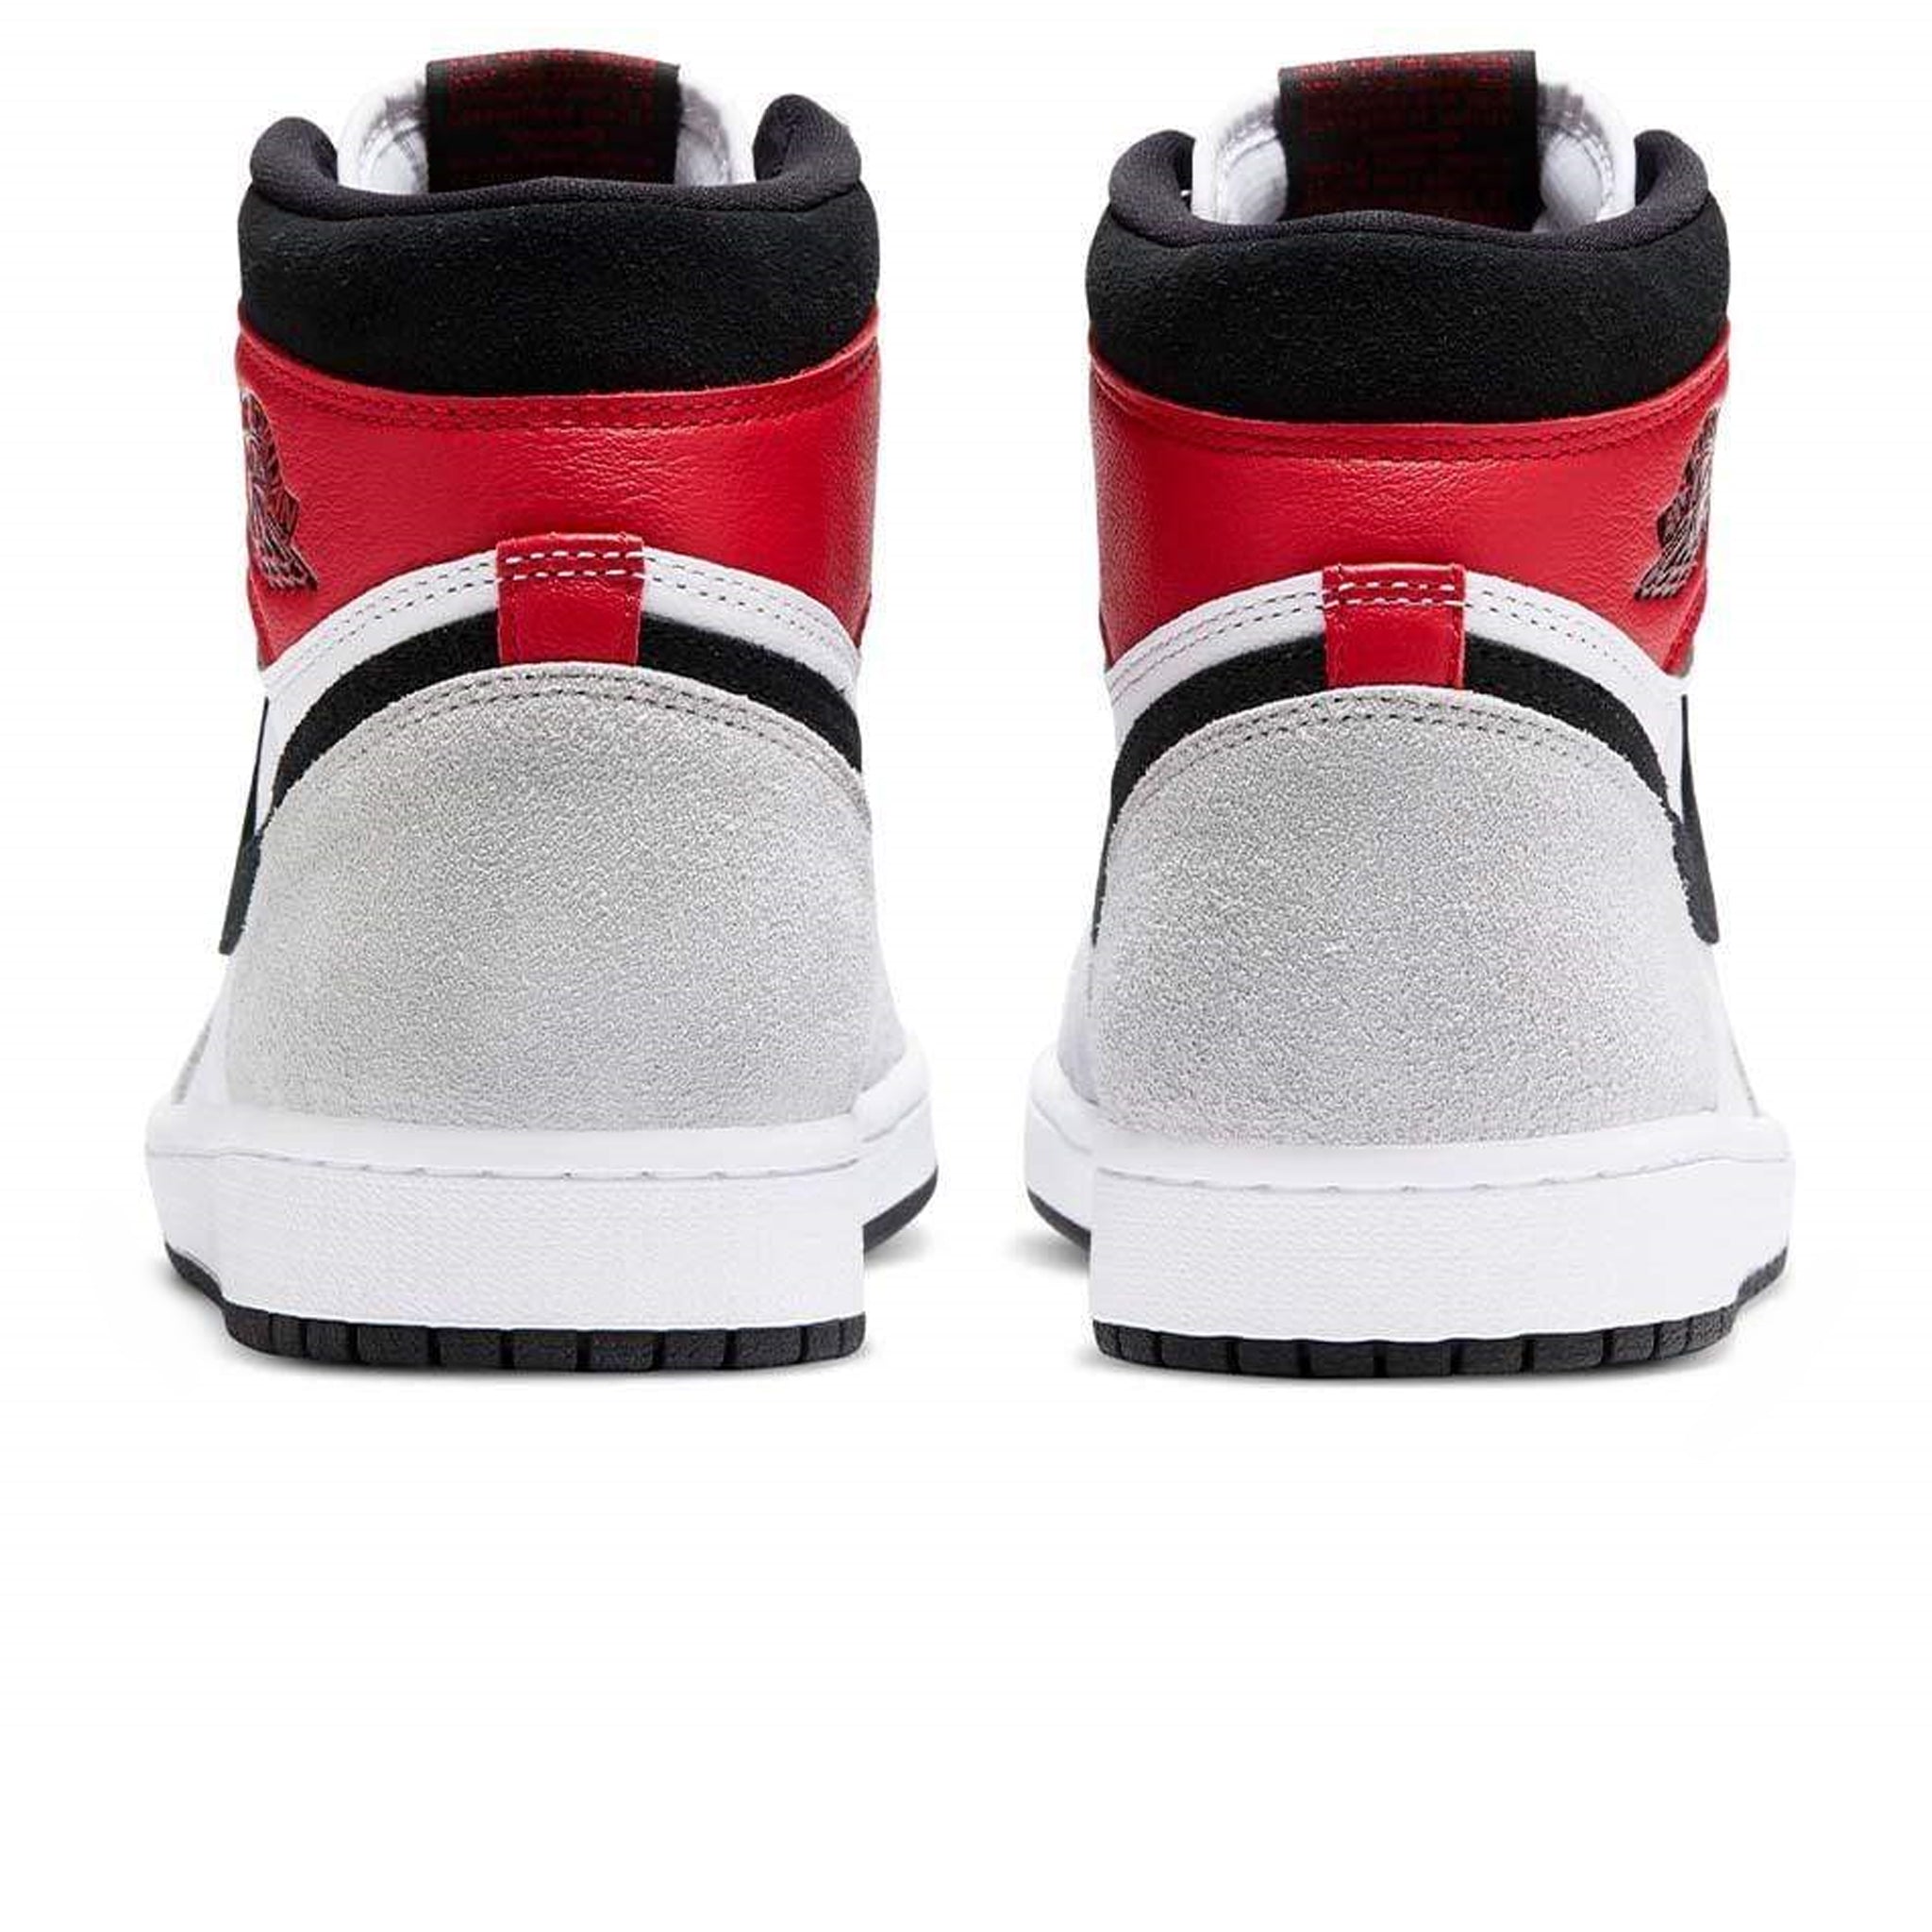 Heel view of Air Jordan 1 High Light Smoke Grey Sneaker 555088-126